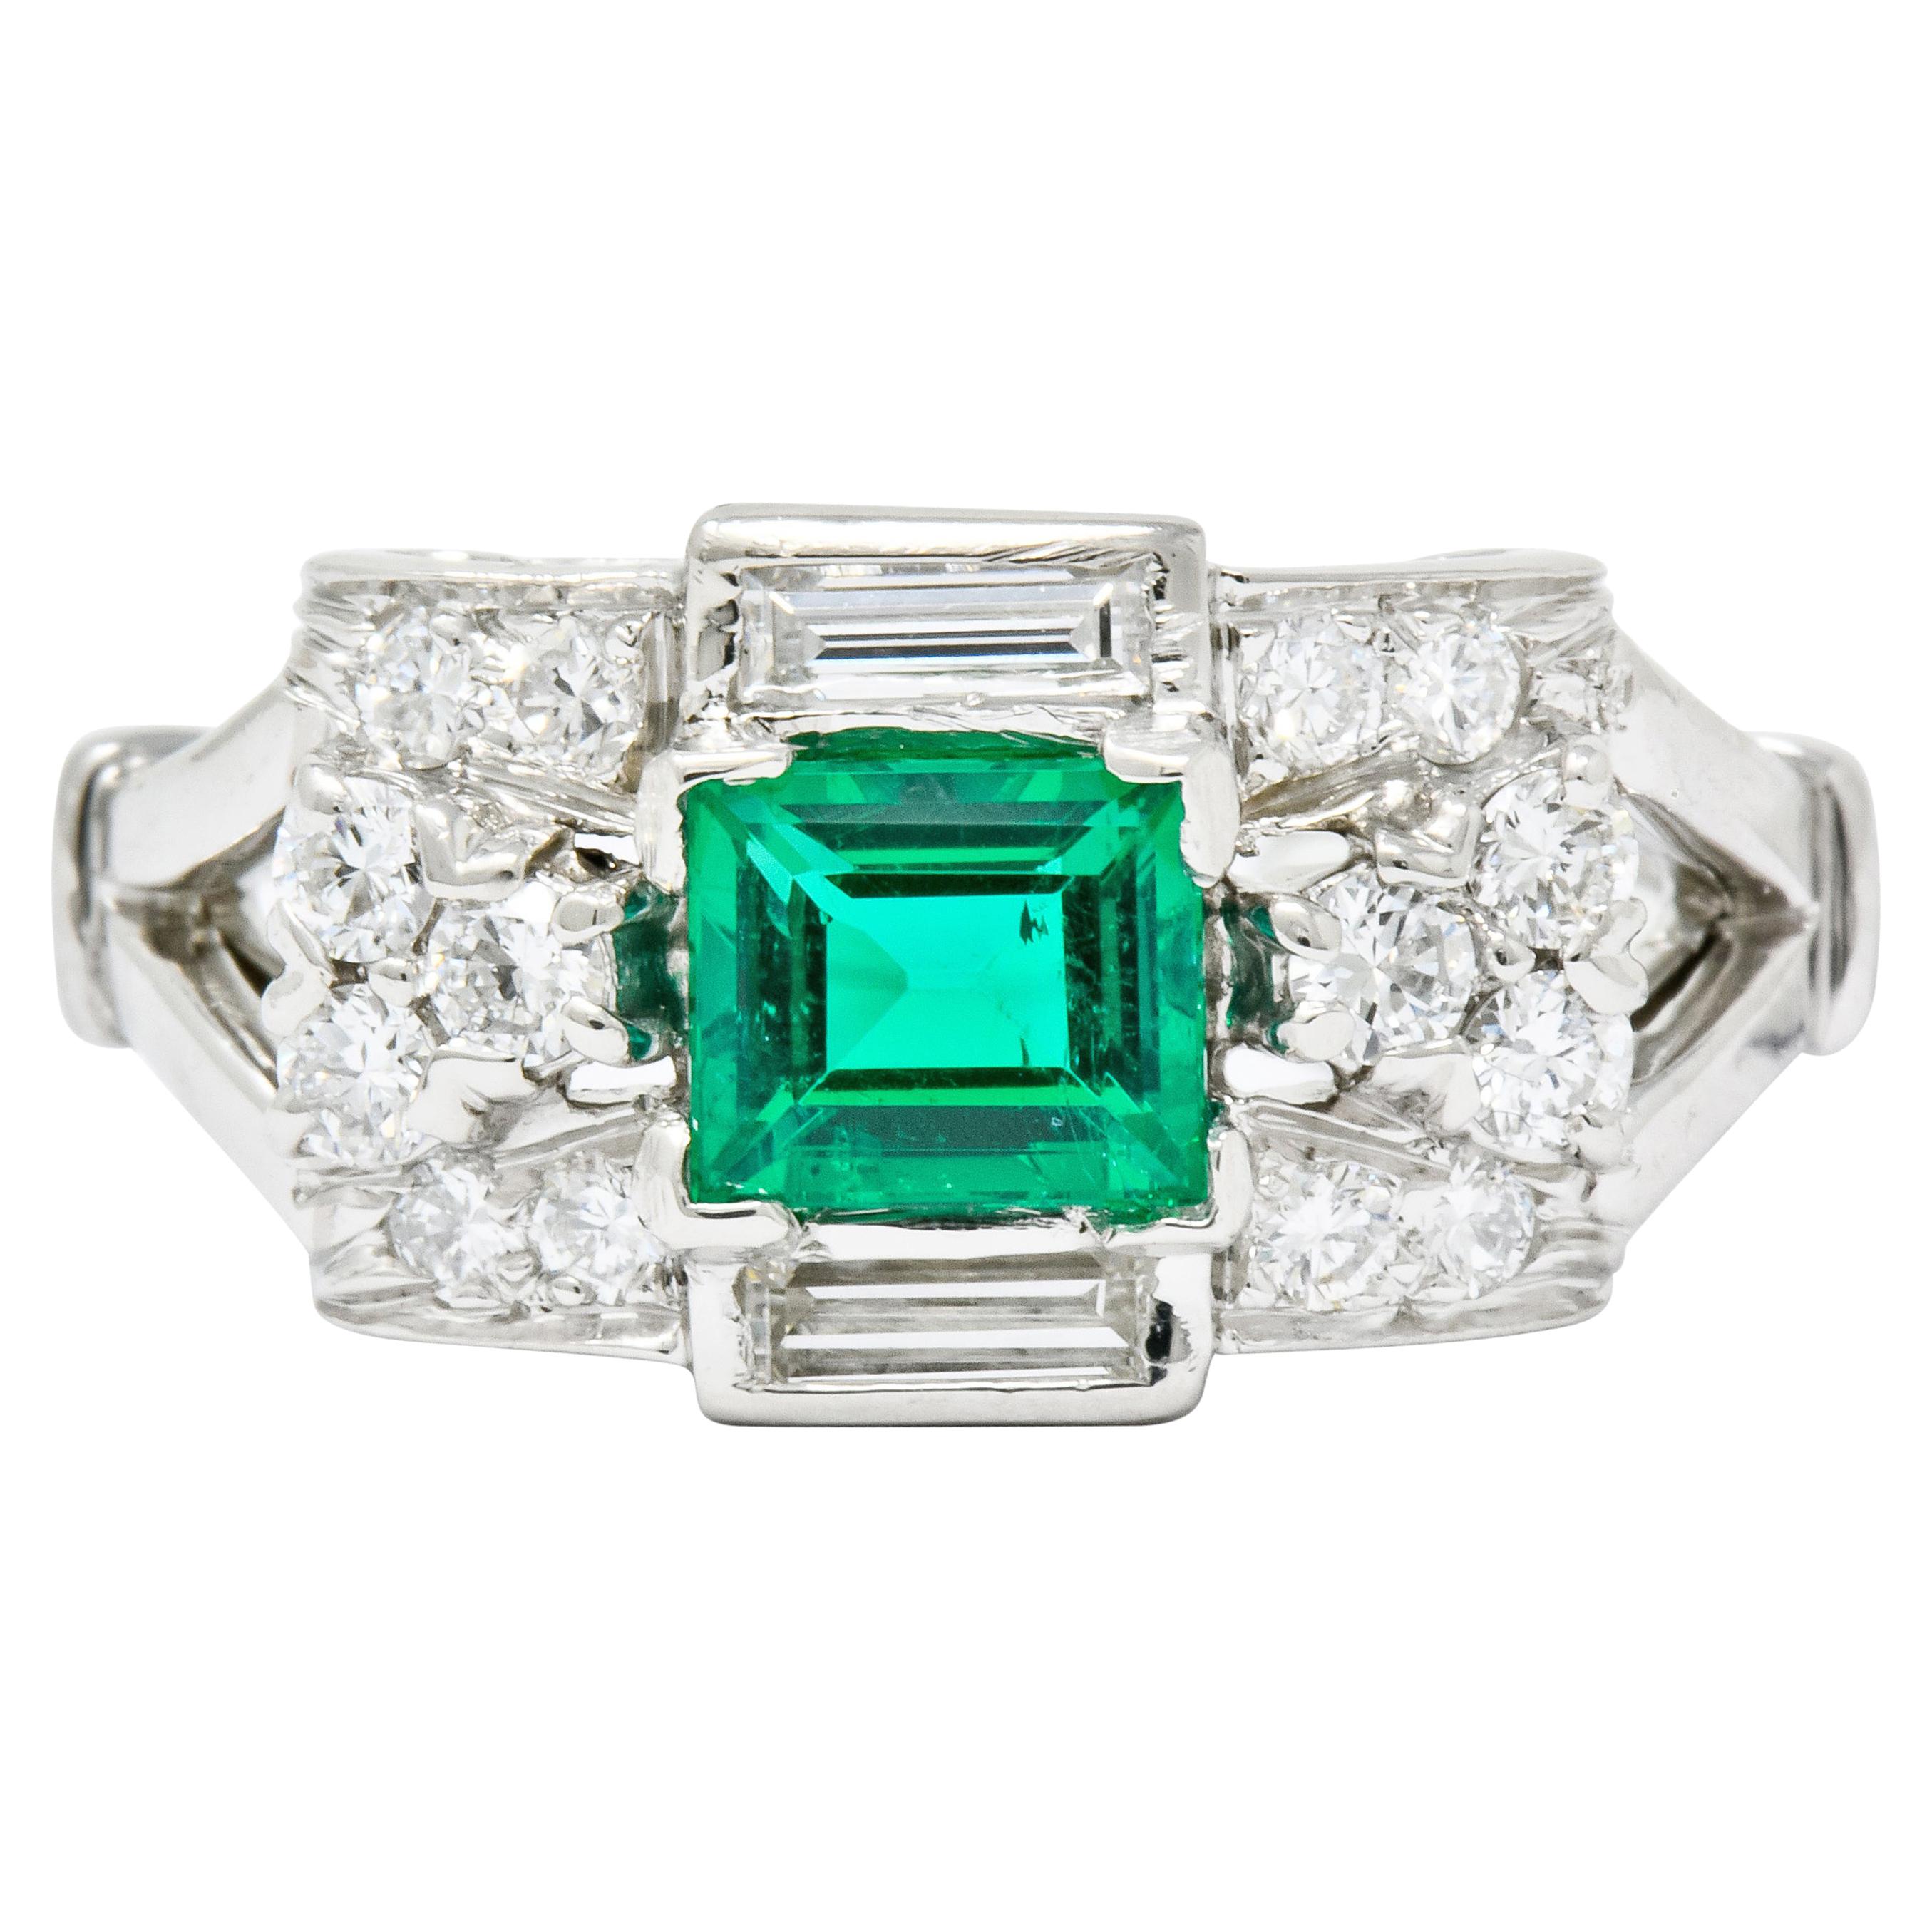 Tiffany & Co. Emerald Baguette Brilliant Diamond Platinum Ring, circa 1950